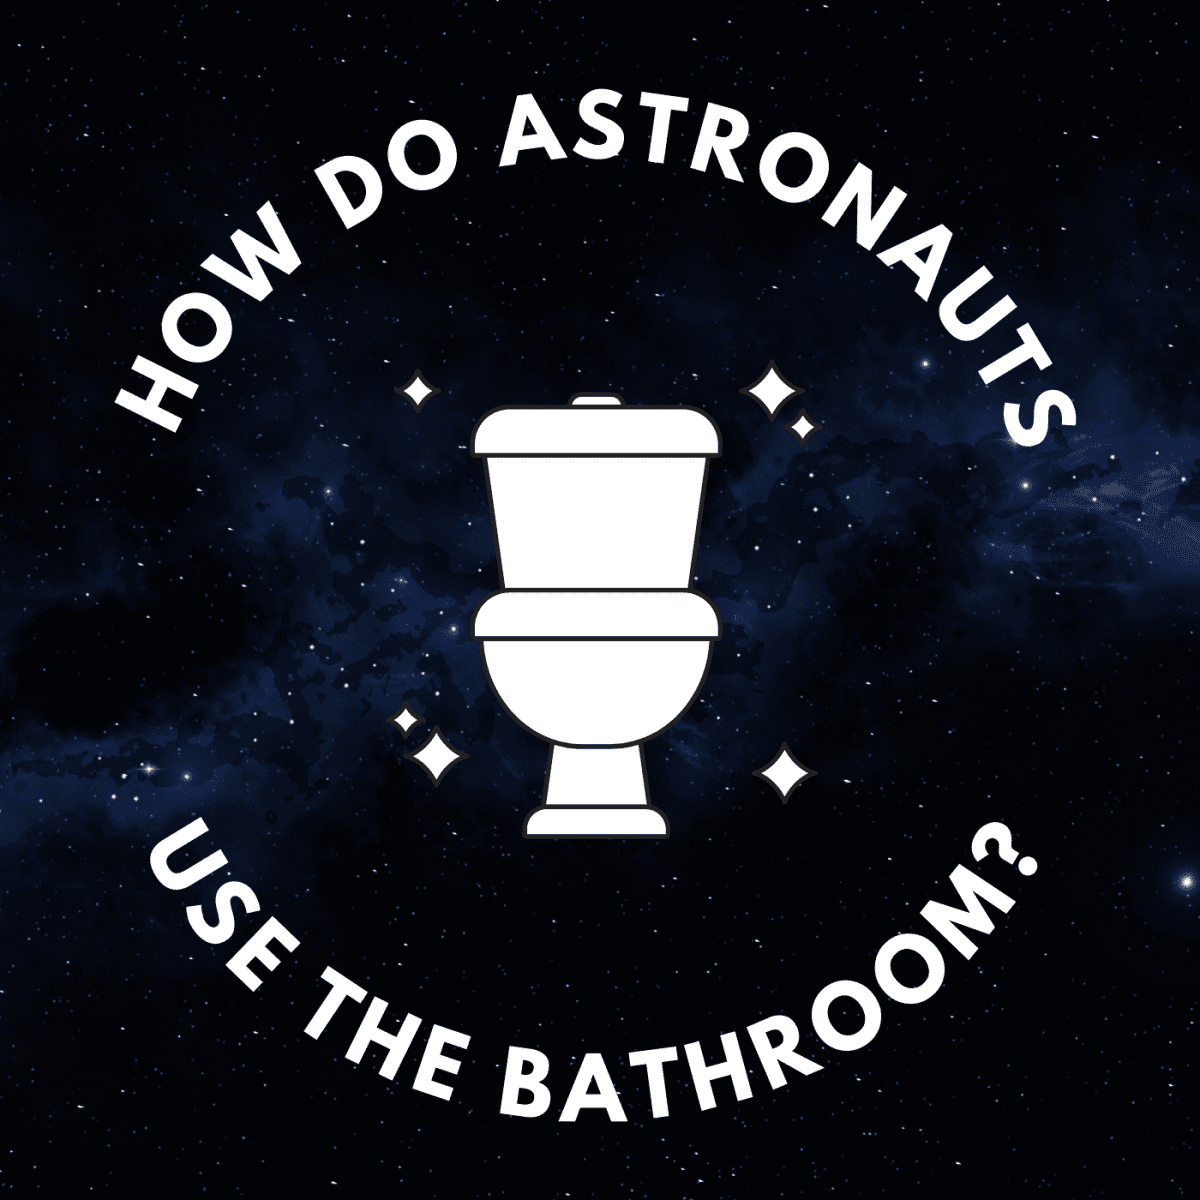 astronauts training to use bathroom